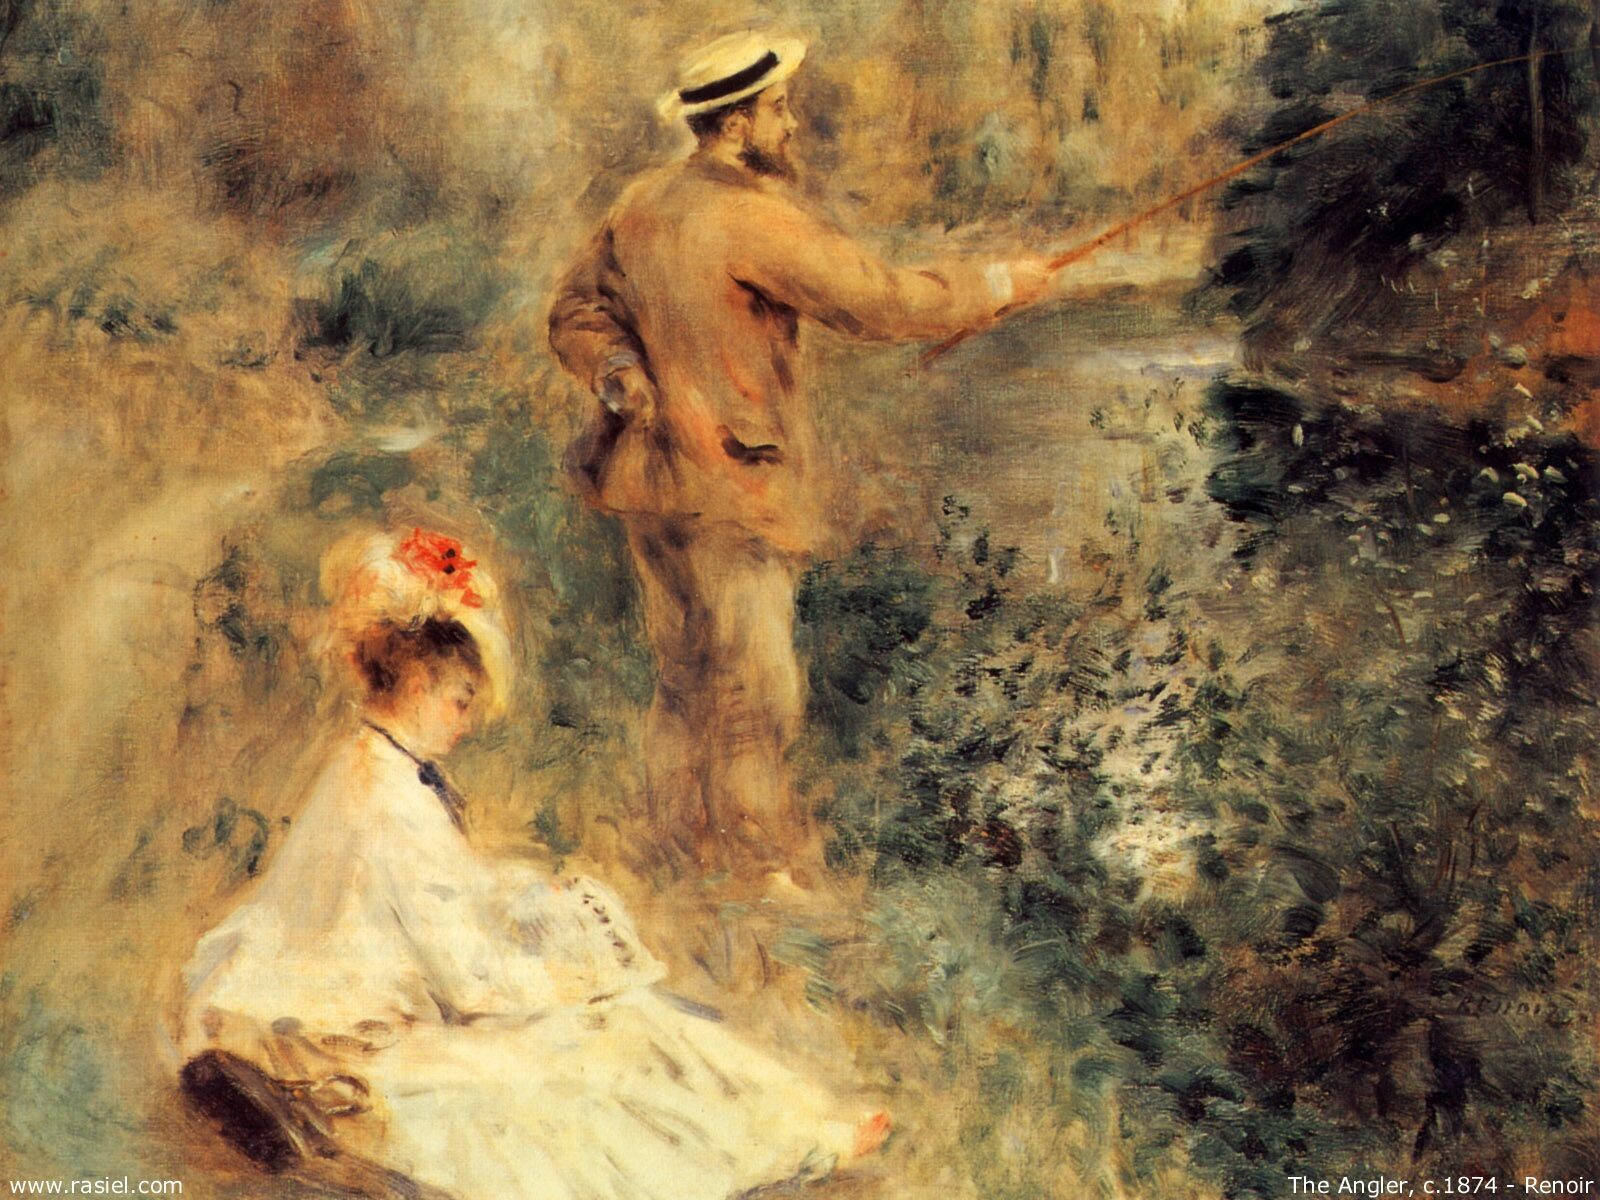 Caption: Renoir's Masterpiece - The Fishing Couple Background